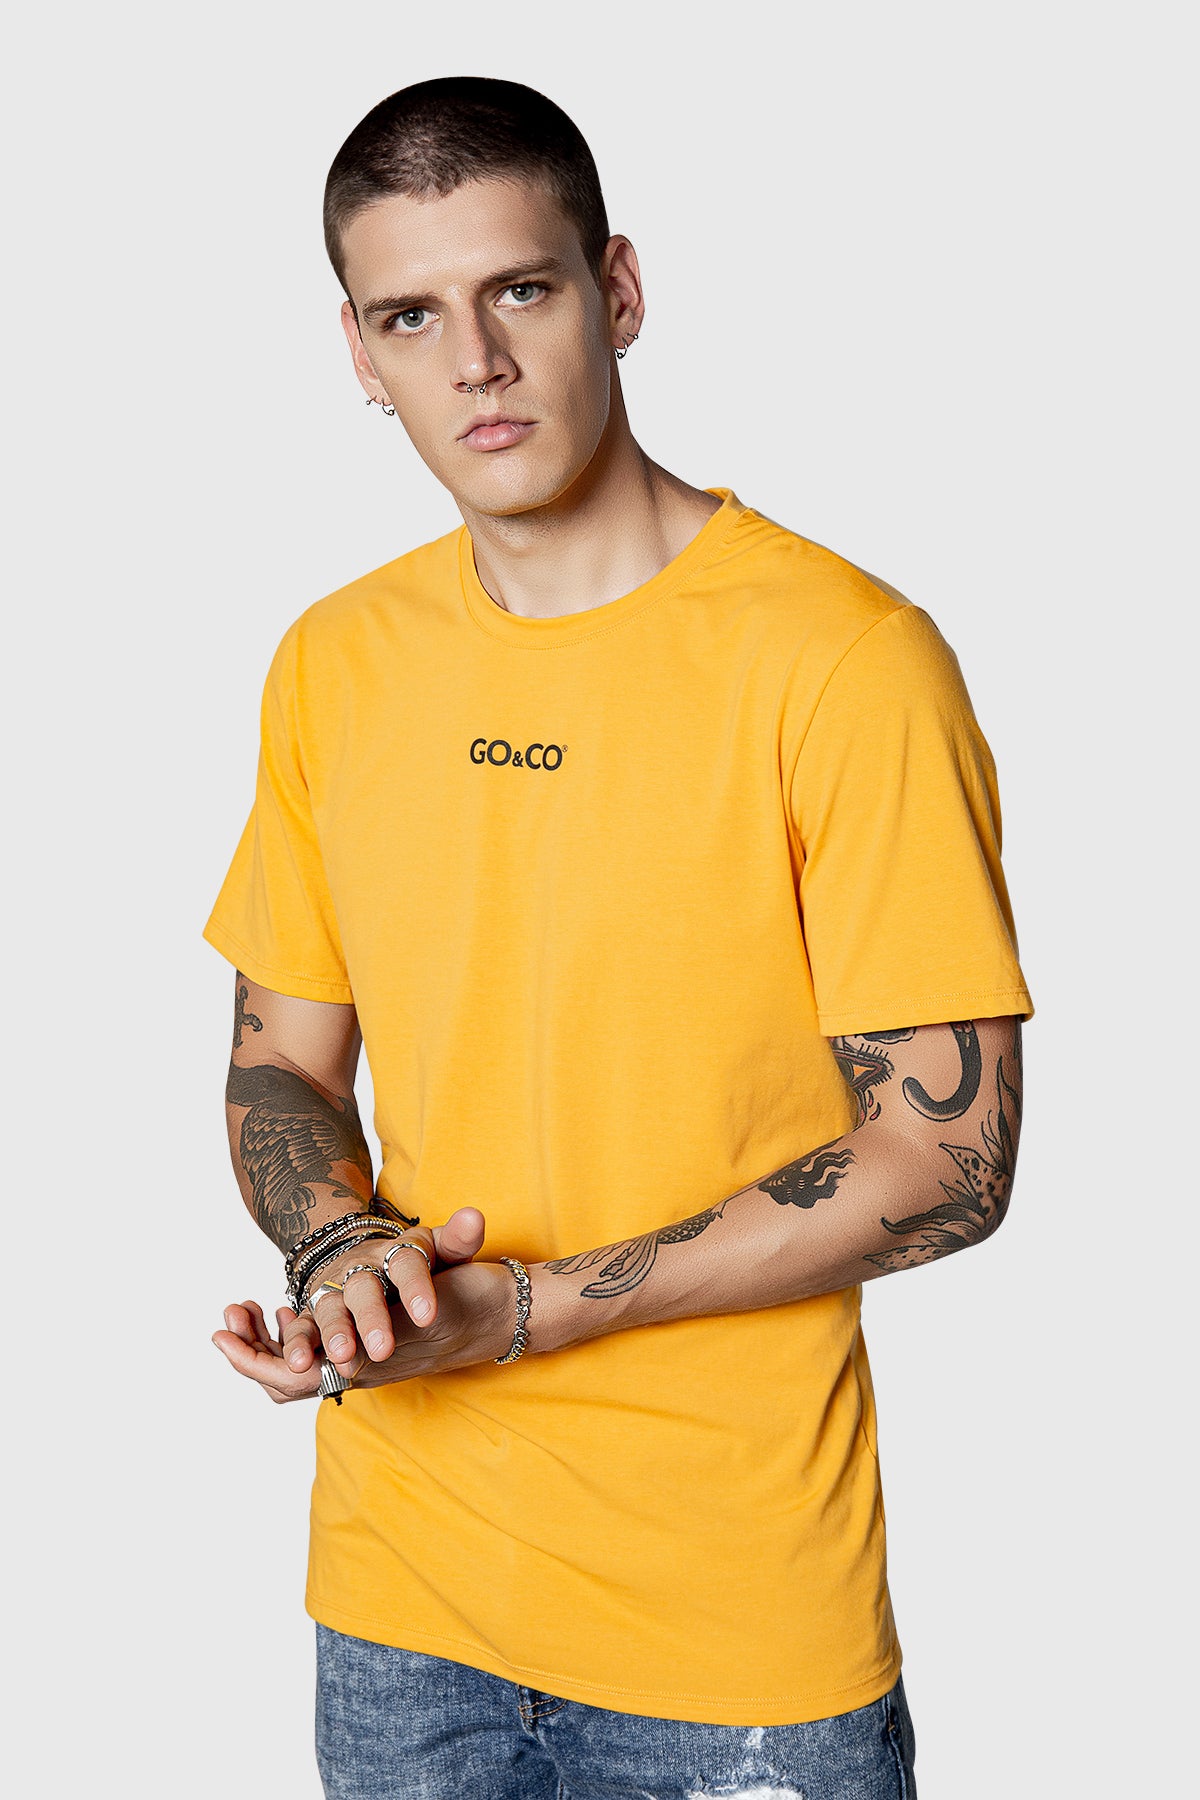 Camiseta GO&CO estampado mostaza